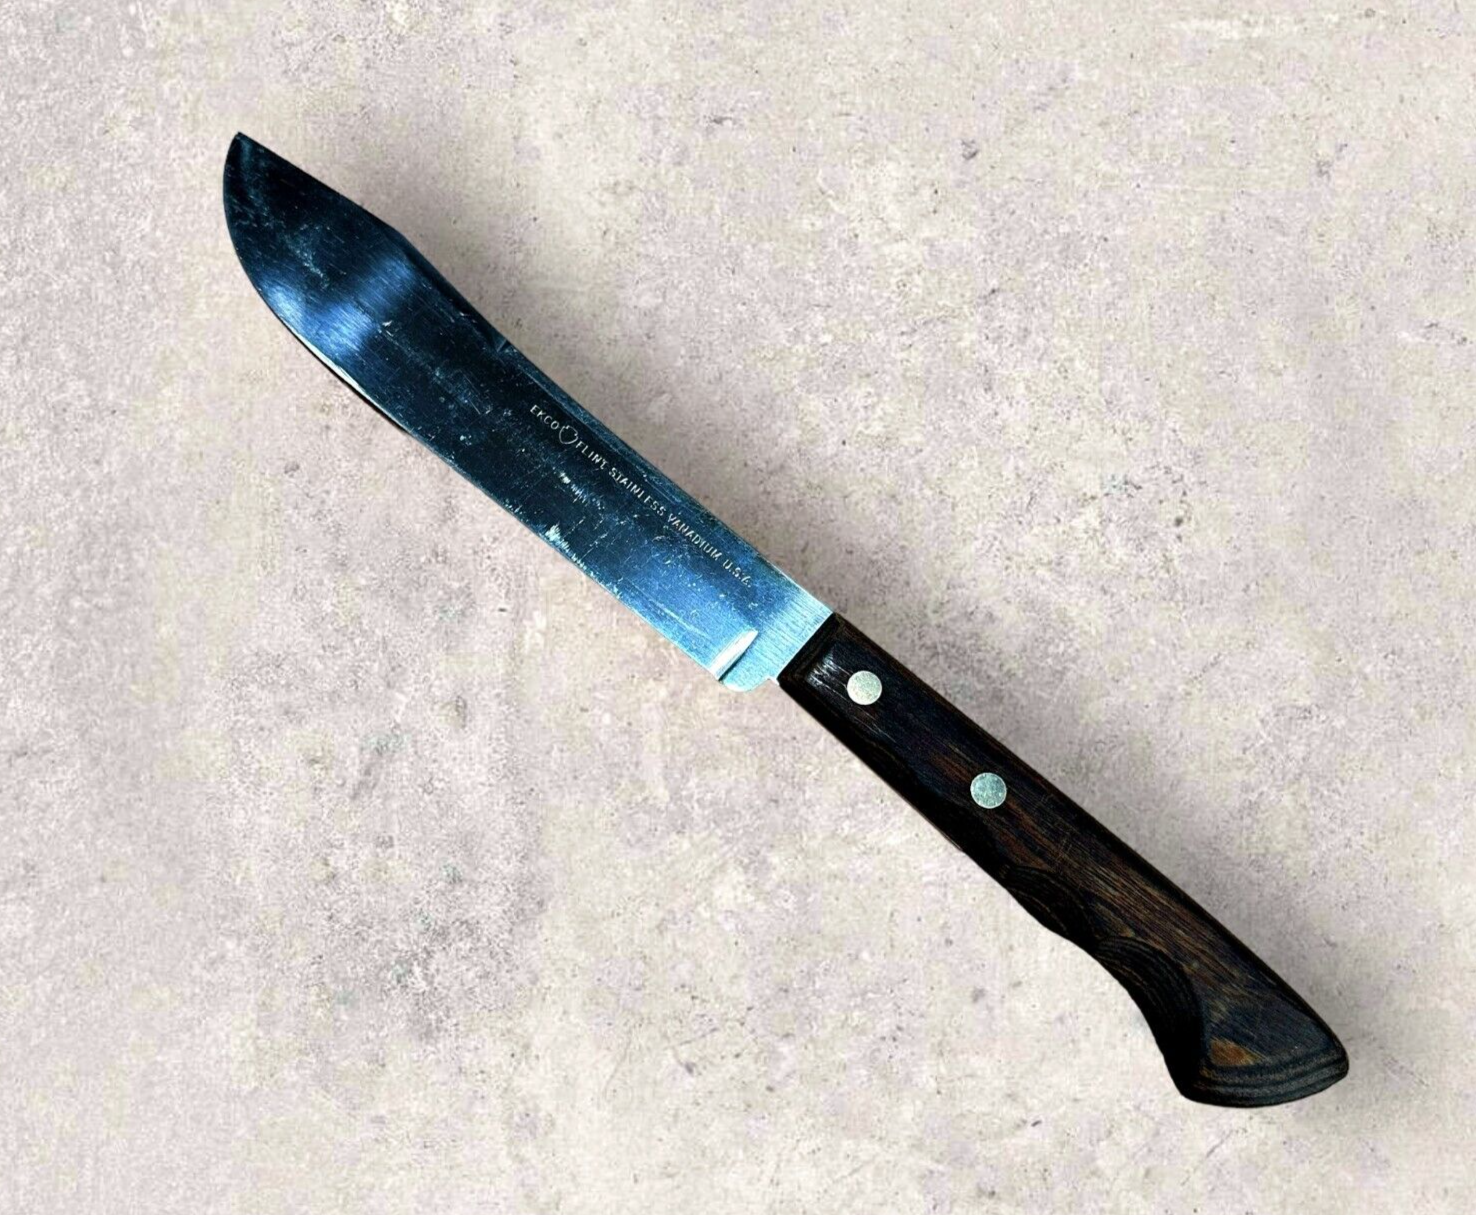 Ekco Flint Stainless Vanadium Carving Knife 7” Blade Wood Handle Vintage USA - $16.29